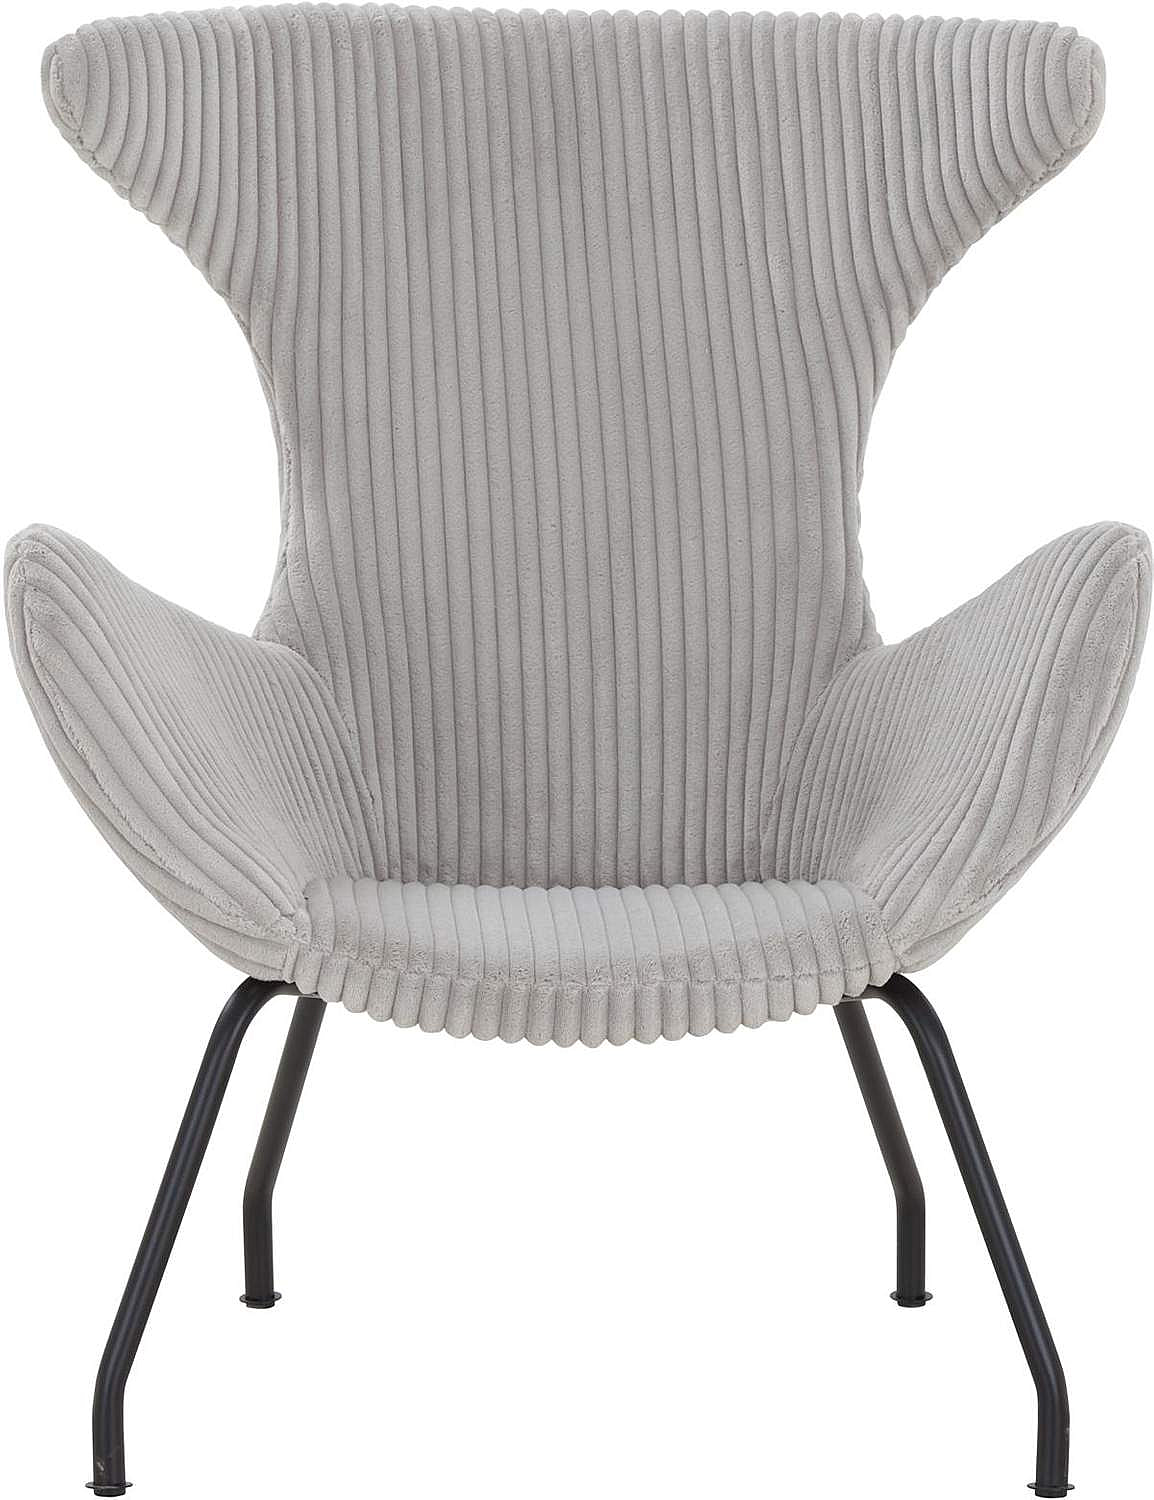 Relaxsessel Sessel mit Grau in Texturstoff SalesFever